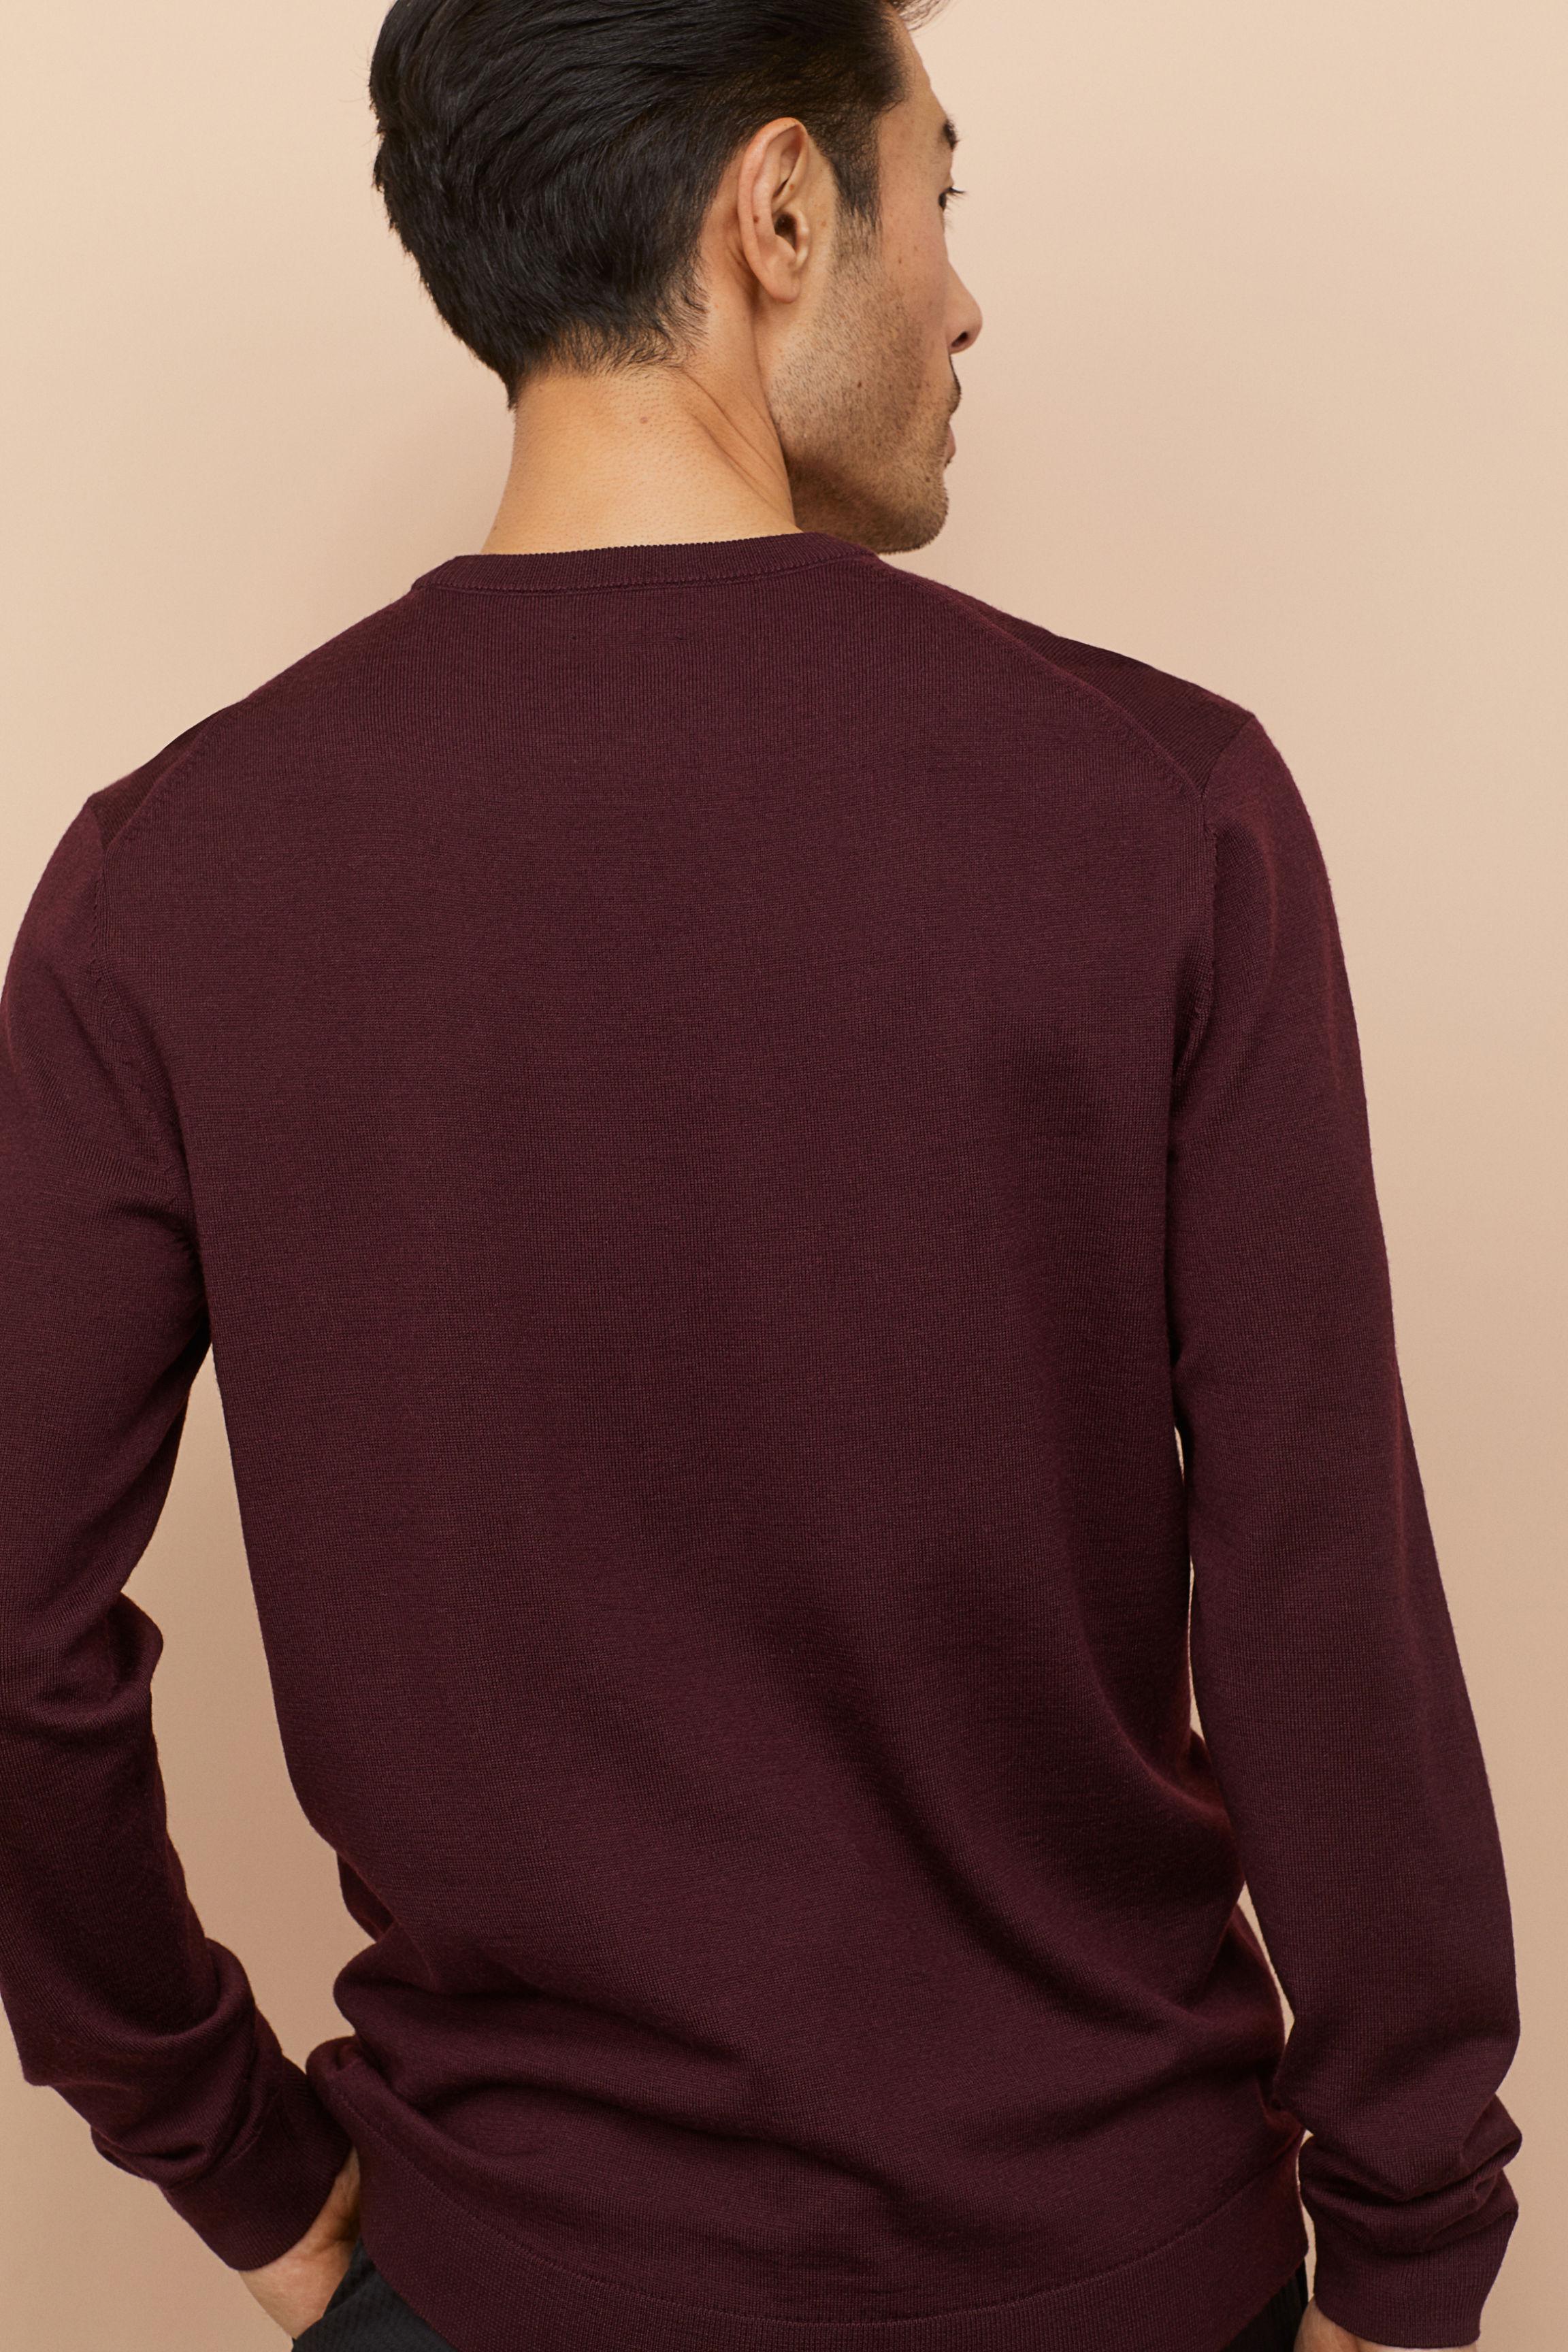 H&M Merino Wool Sweater in Burgundy (Purple) for Men - Lyst